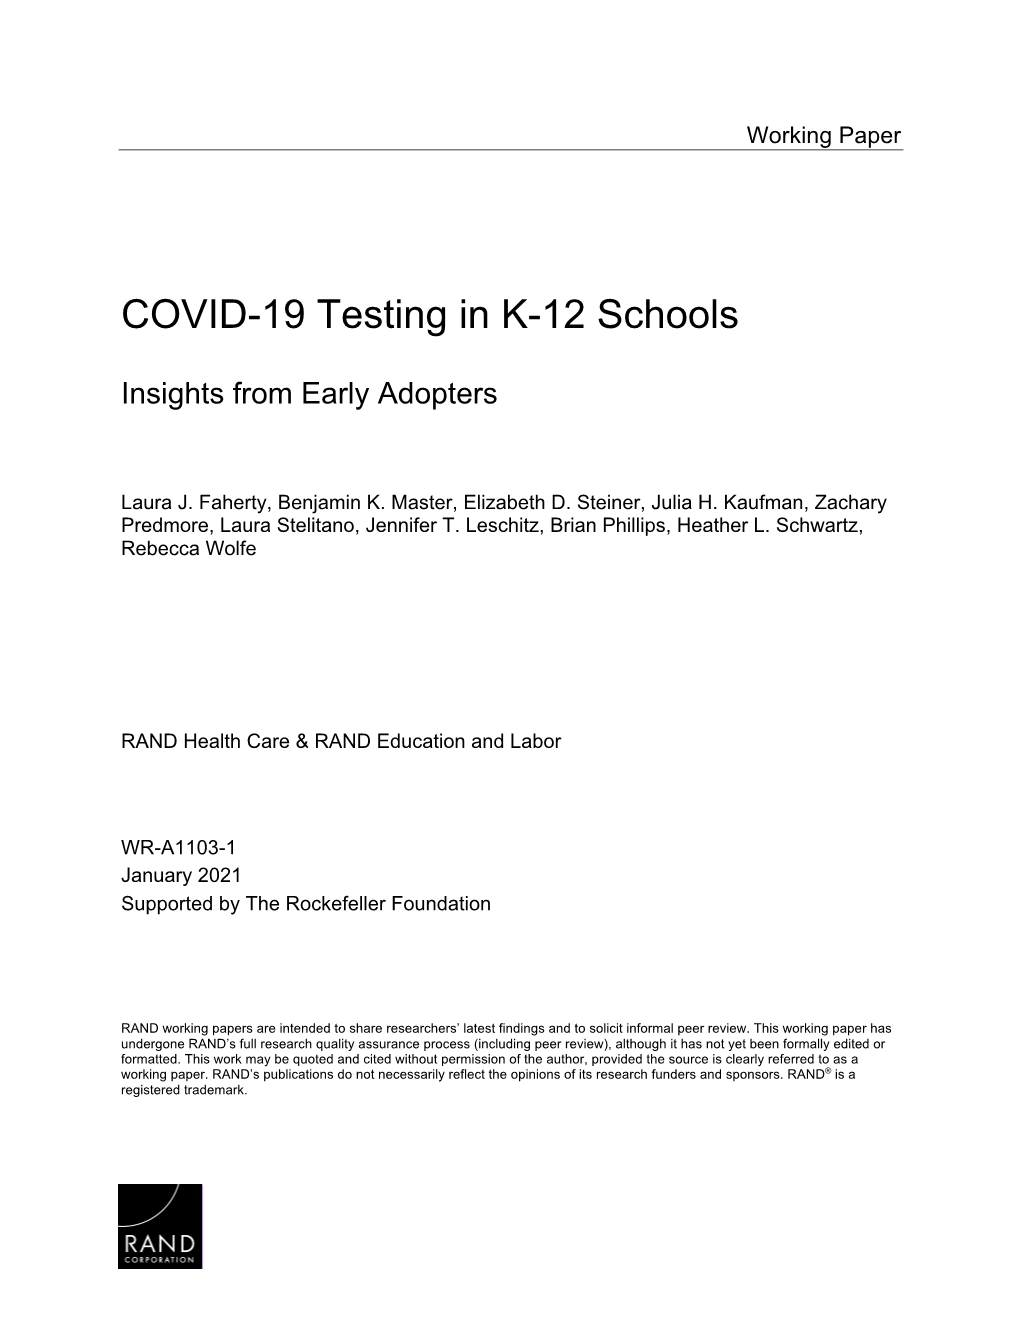 COVID-19 Testing in K-12 Schools